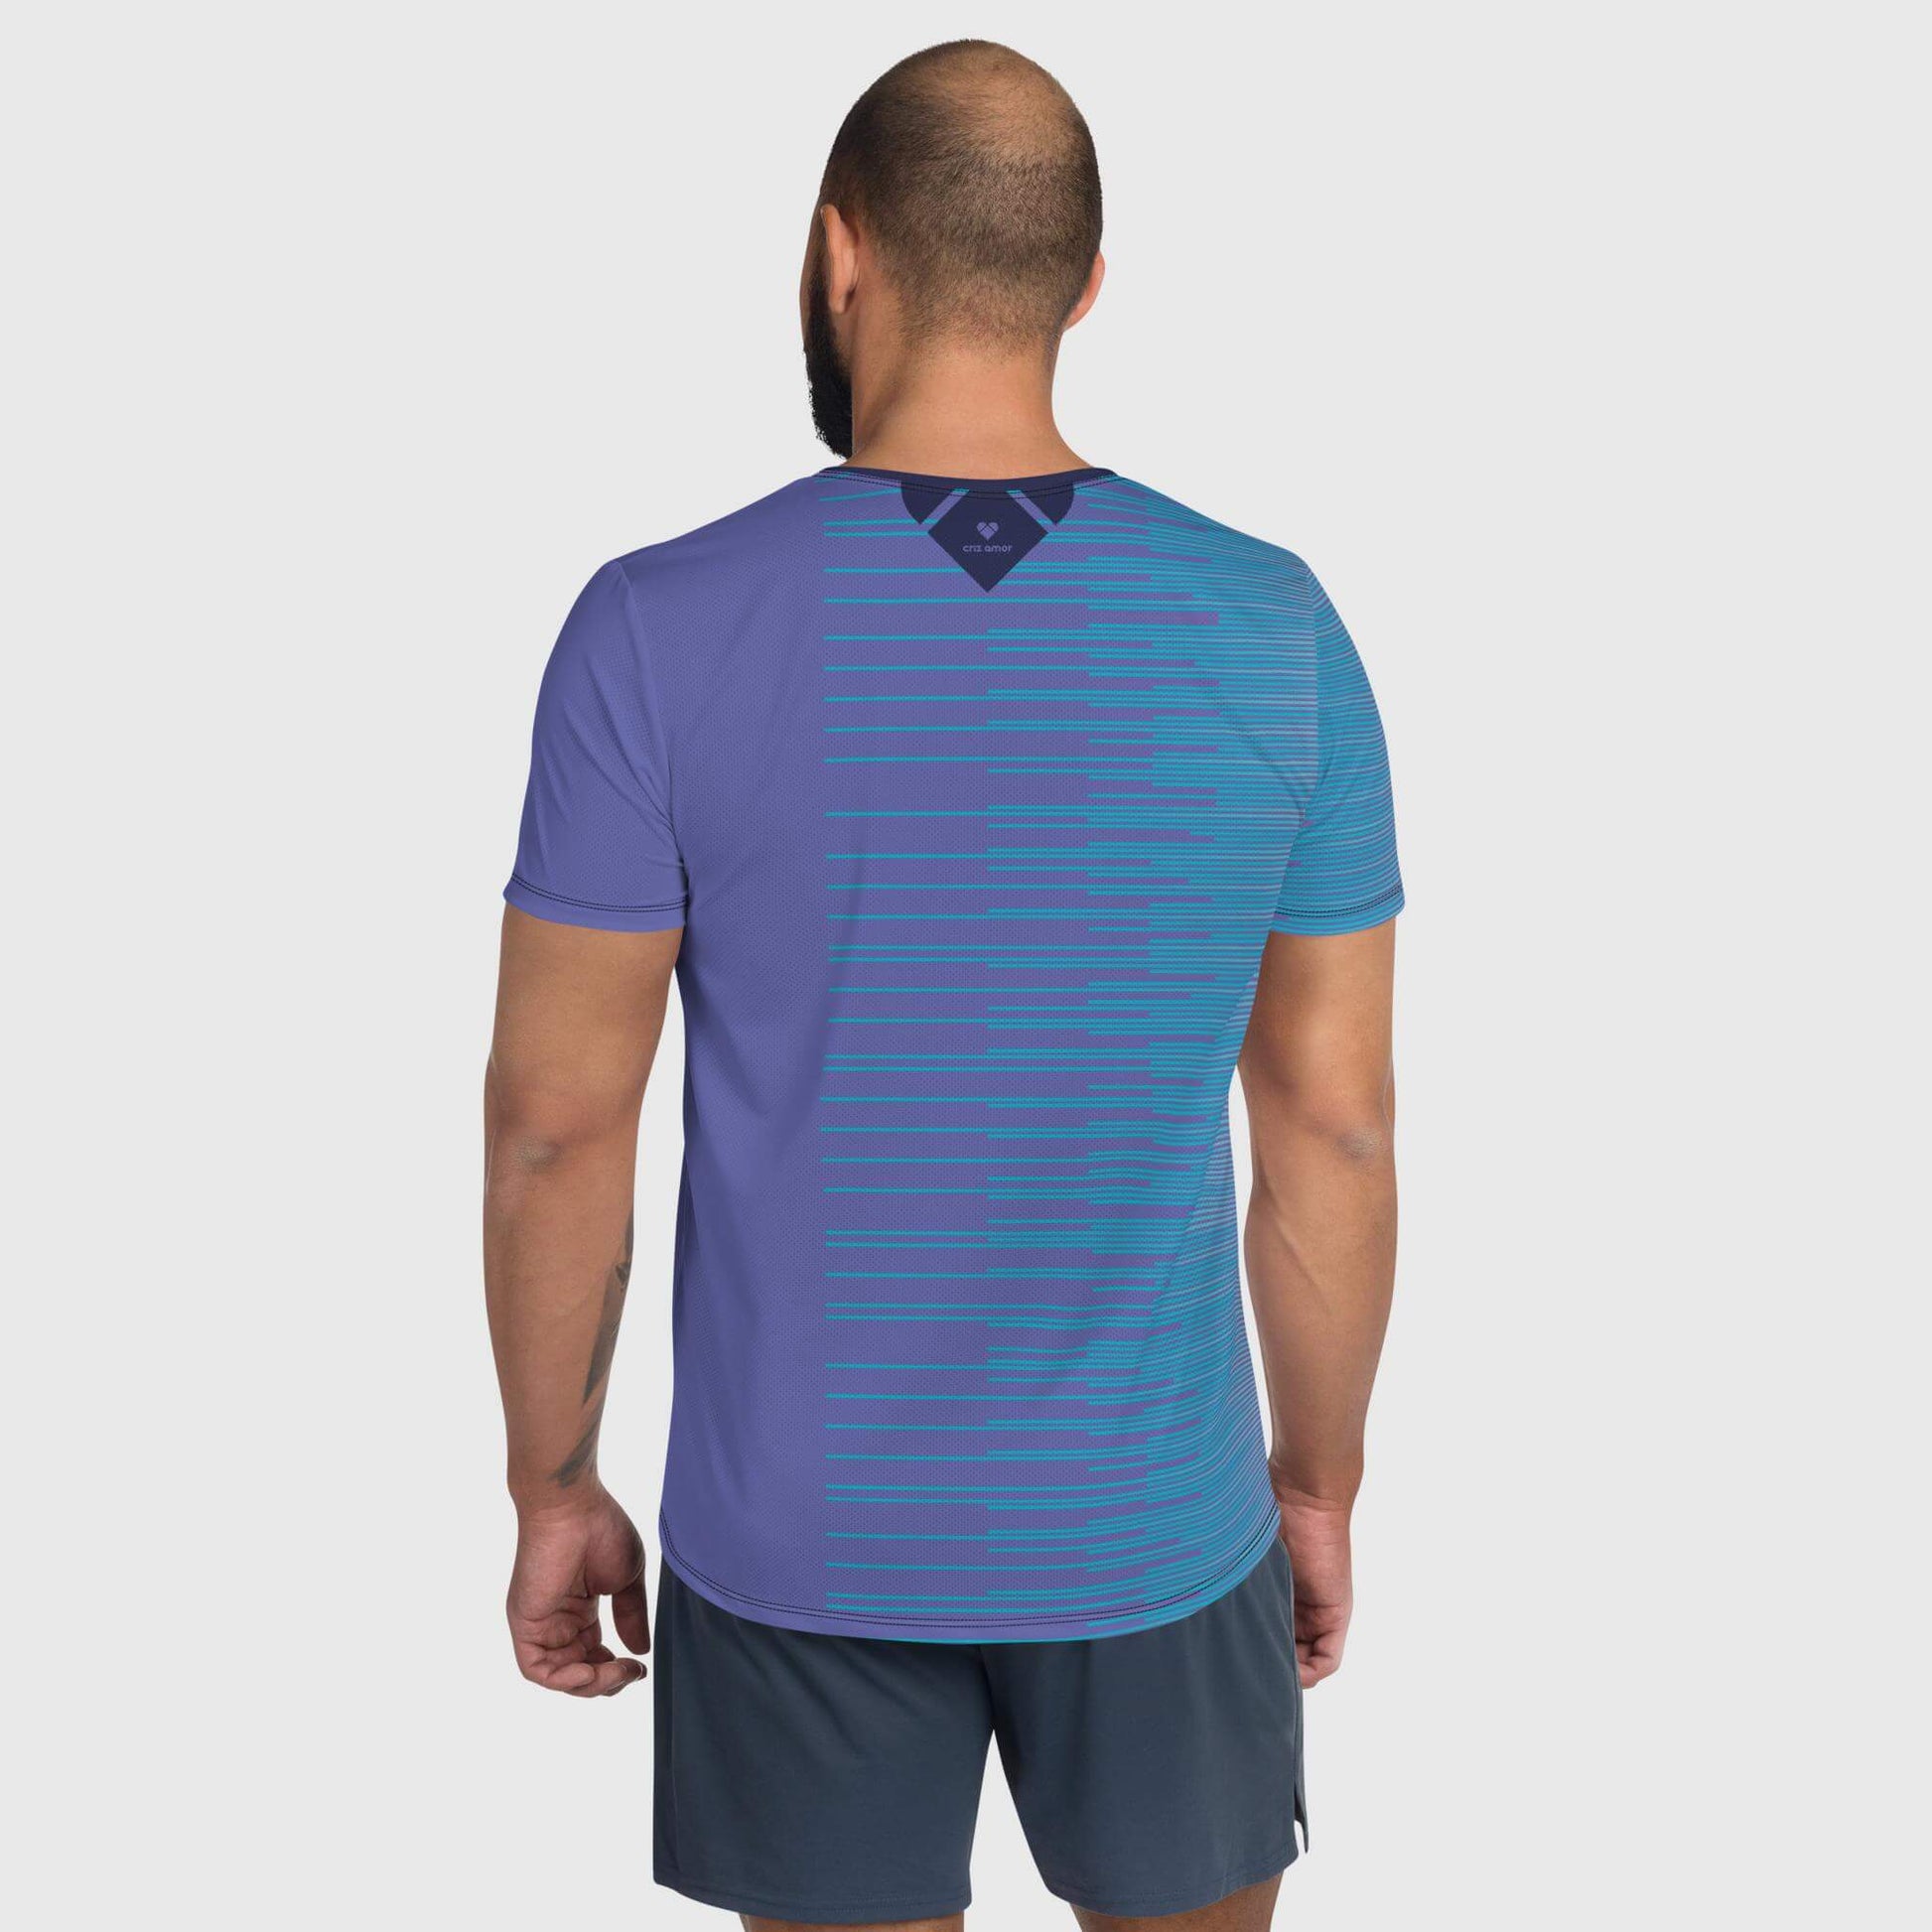 Men's Designer Shirt: Periwinkle Stripes Dual Sport Shirt